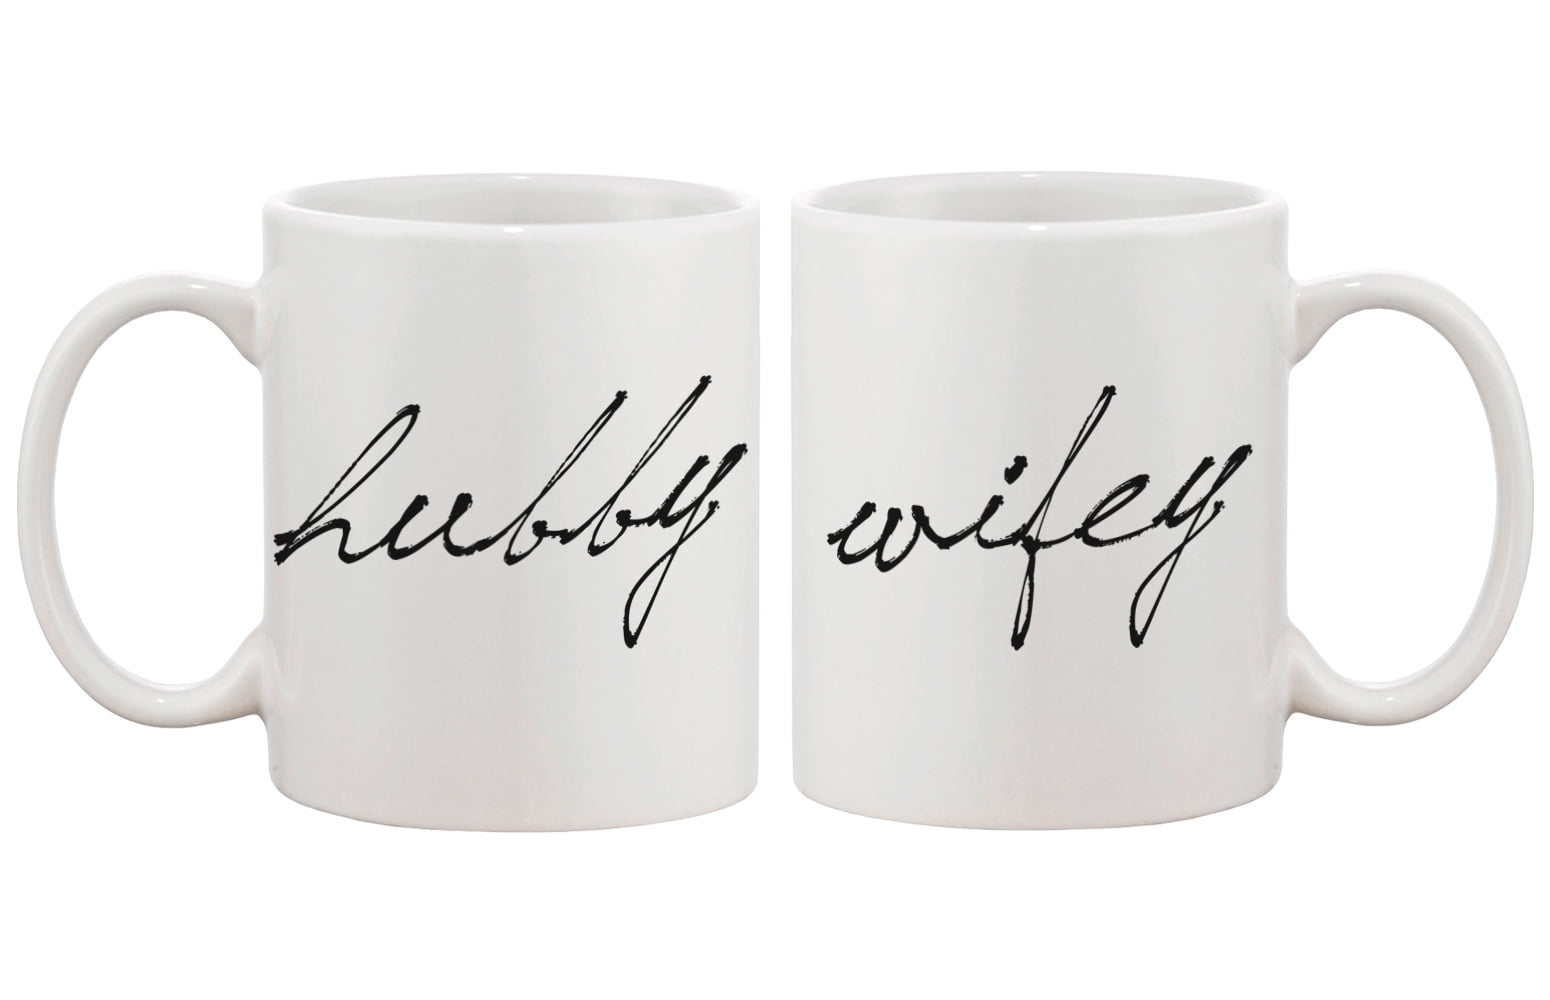 WIFEY HUBBY Alankathy Mugs shot glass set white ceramic 1.5 oz 